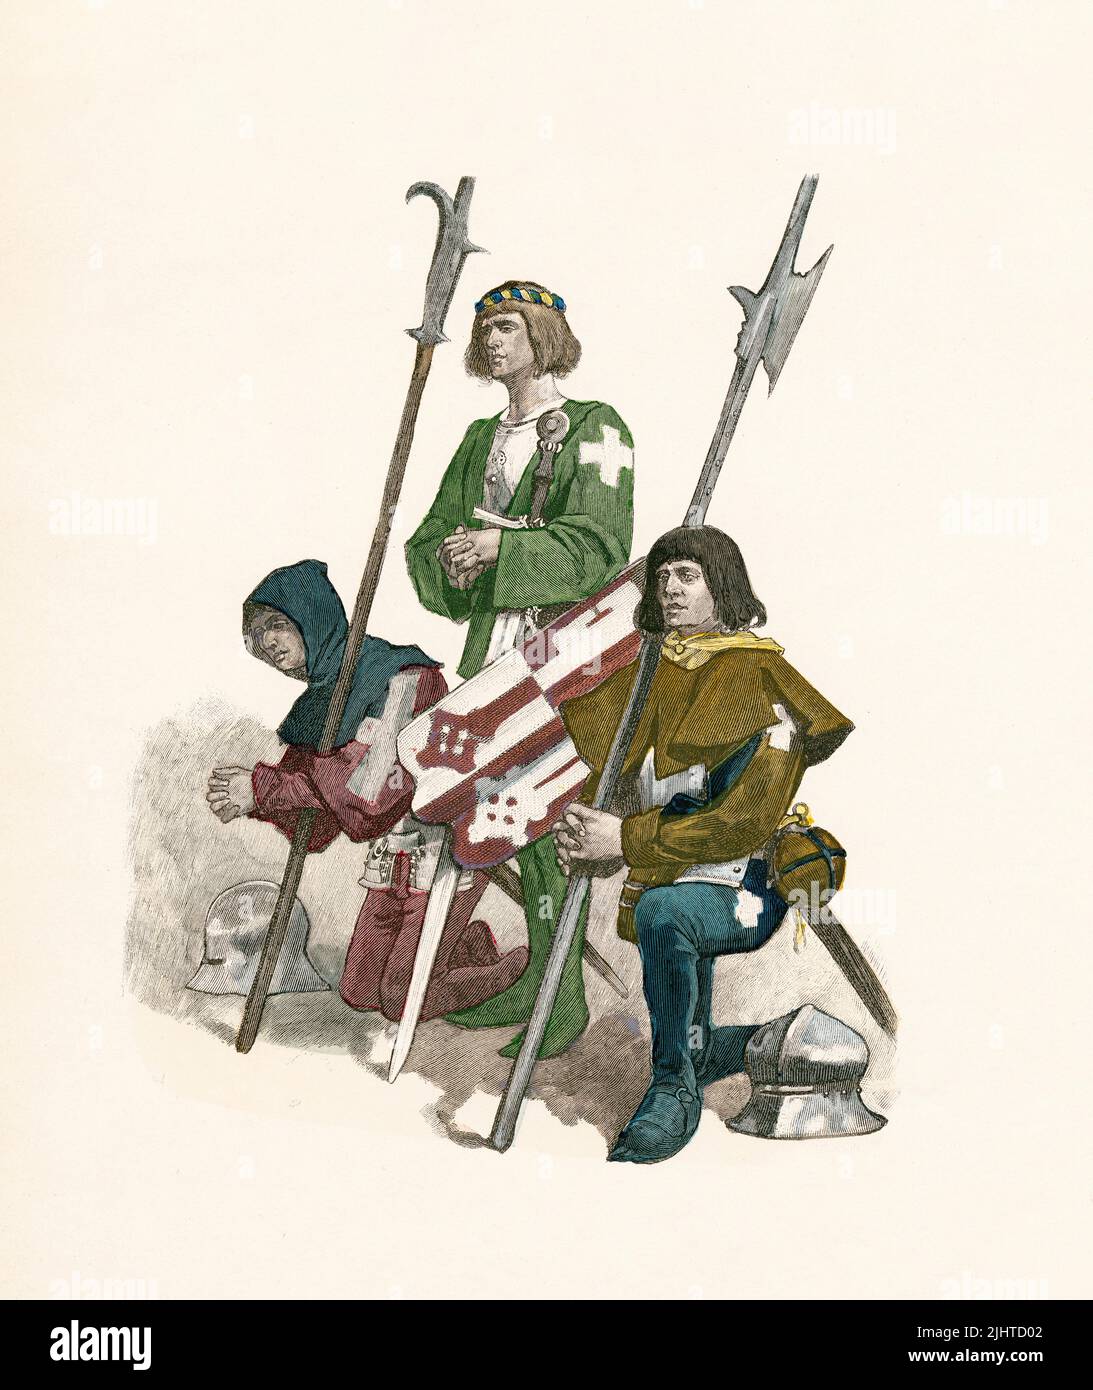 Fantassins, Costume militaire suisse, 15th Century, Illustration, l'Histoire du Costume, Braun & Schneider, Munich, Allemagne, 1861-1880 Banque D'Images